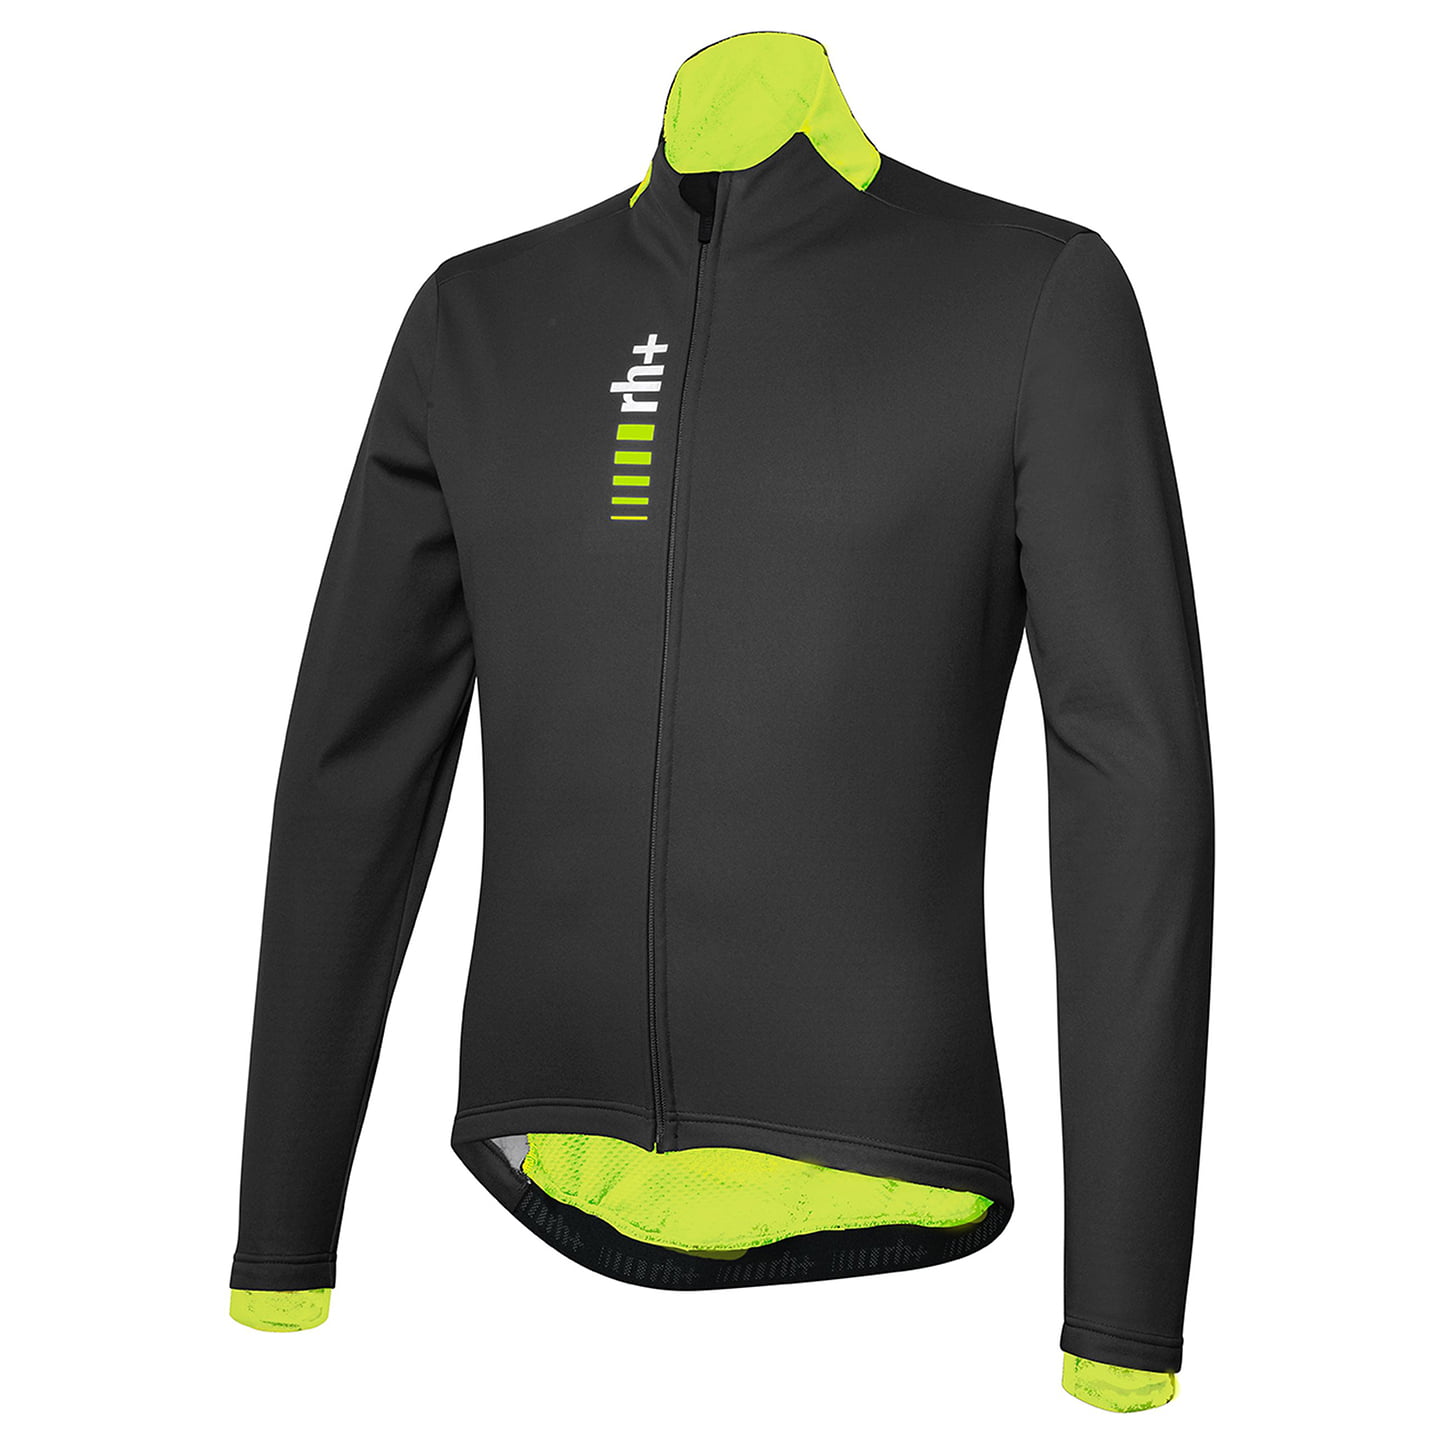 RH+ StylusWinter Jacket Thermal Jacket, for men, size XL, Cycle jacket, Cycle gear